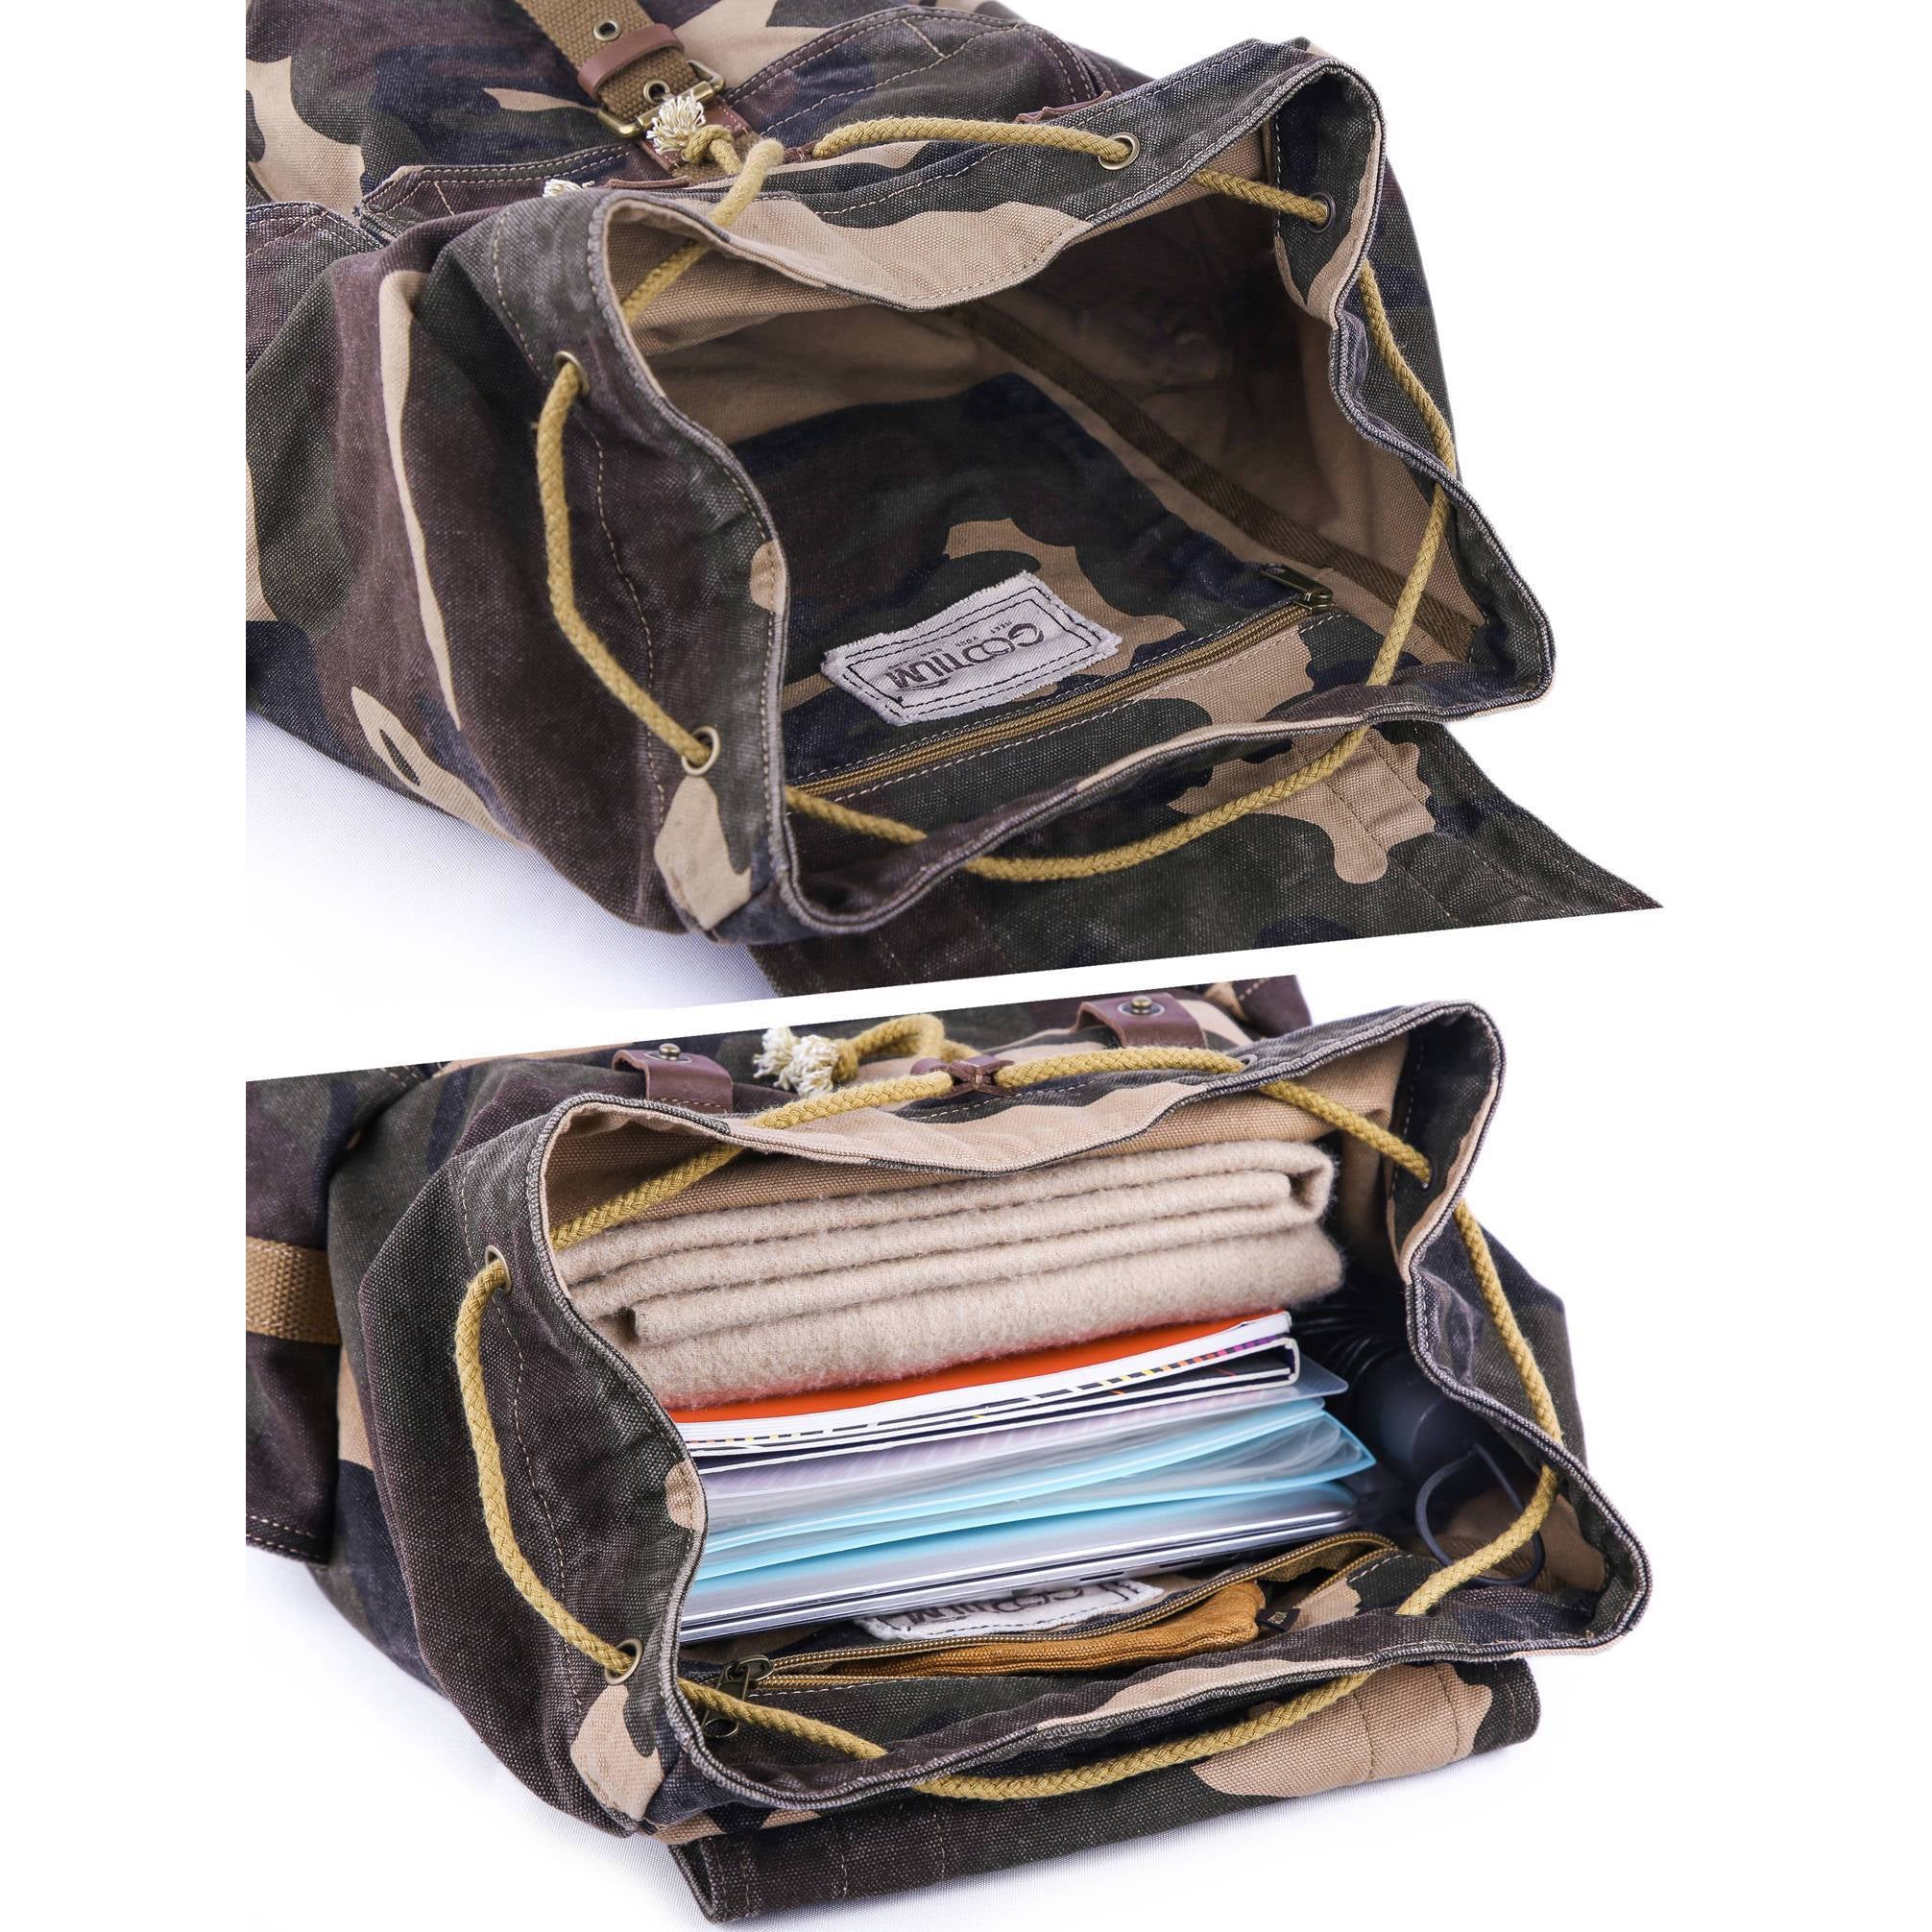 Gootium Tie-Dyed Backpack - Canvas Leather Travel Daypack Vintage Rucksack